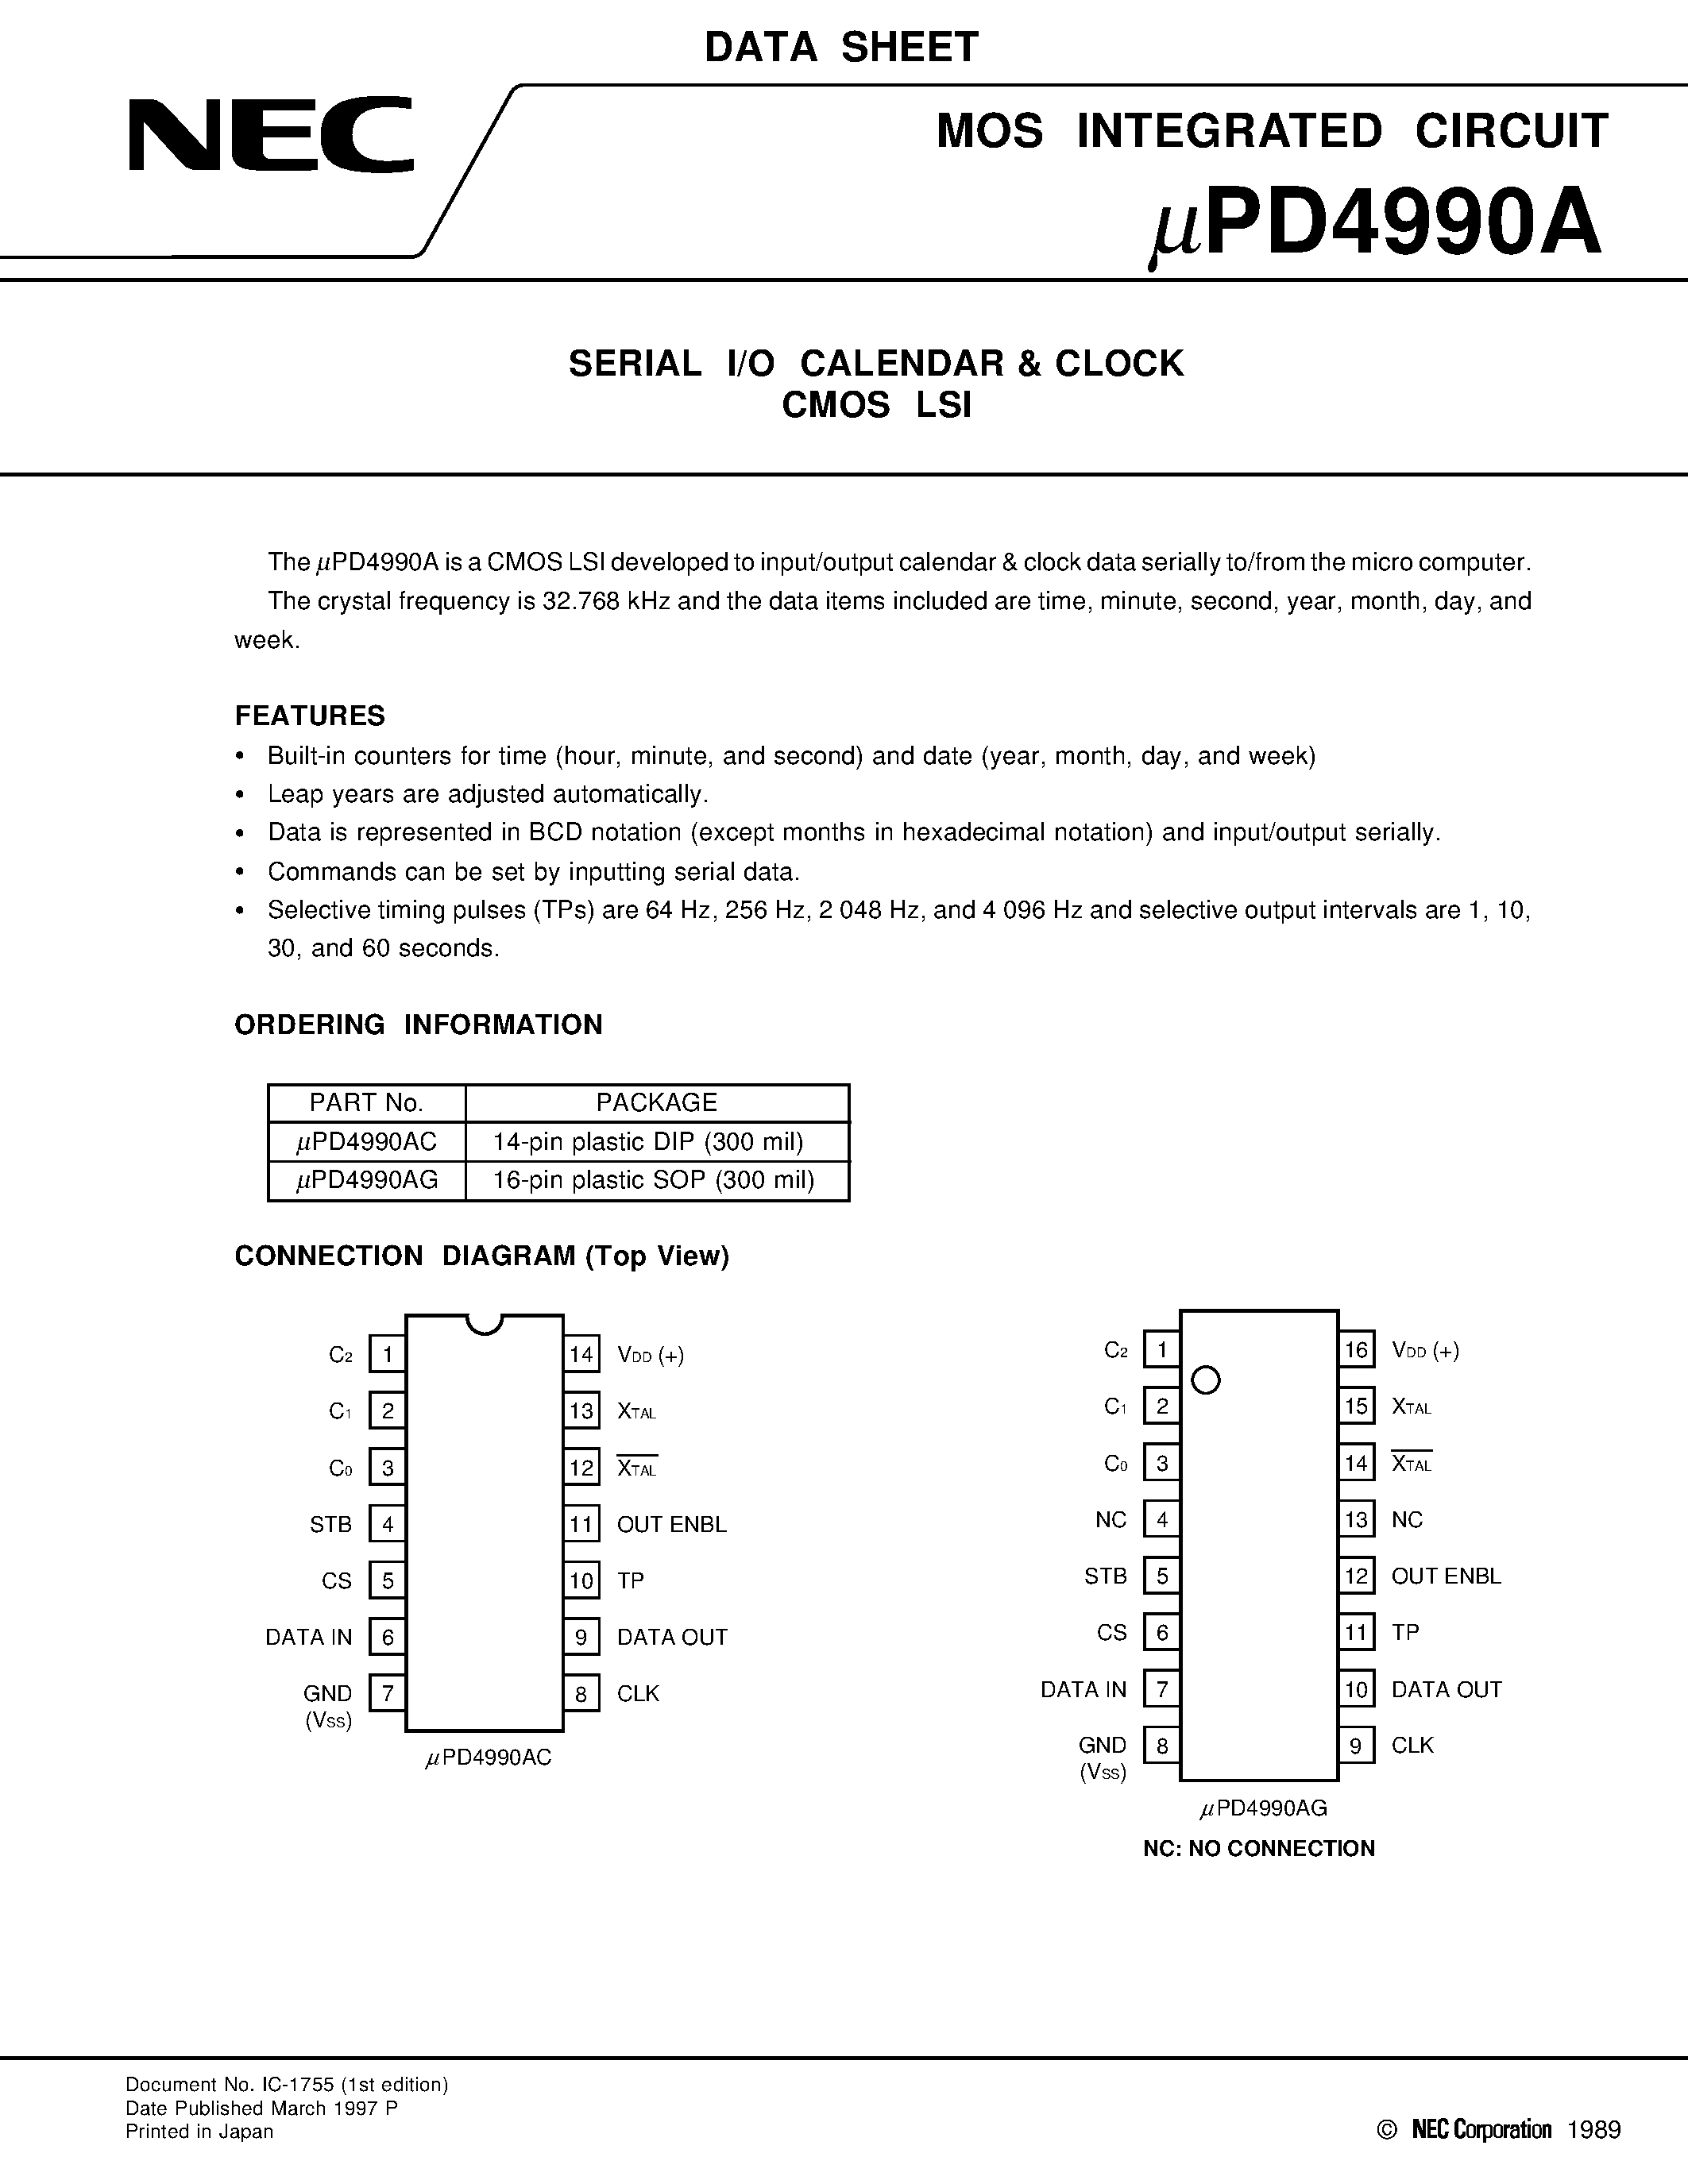 Datasheet UPD4990AG - SERIAL I/O CALENDAR & CLOCK CMOS LSI page 1